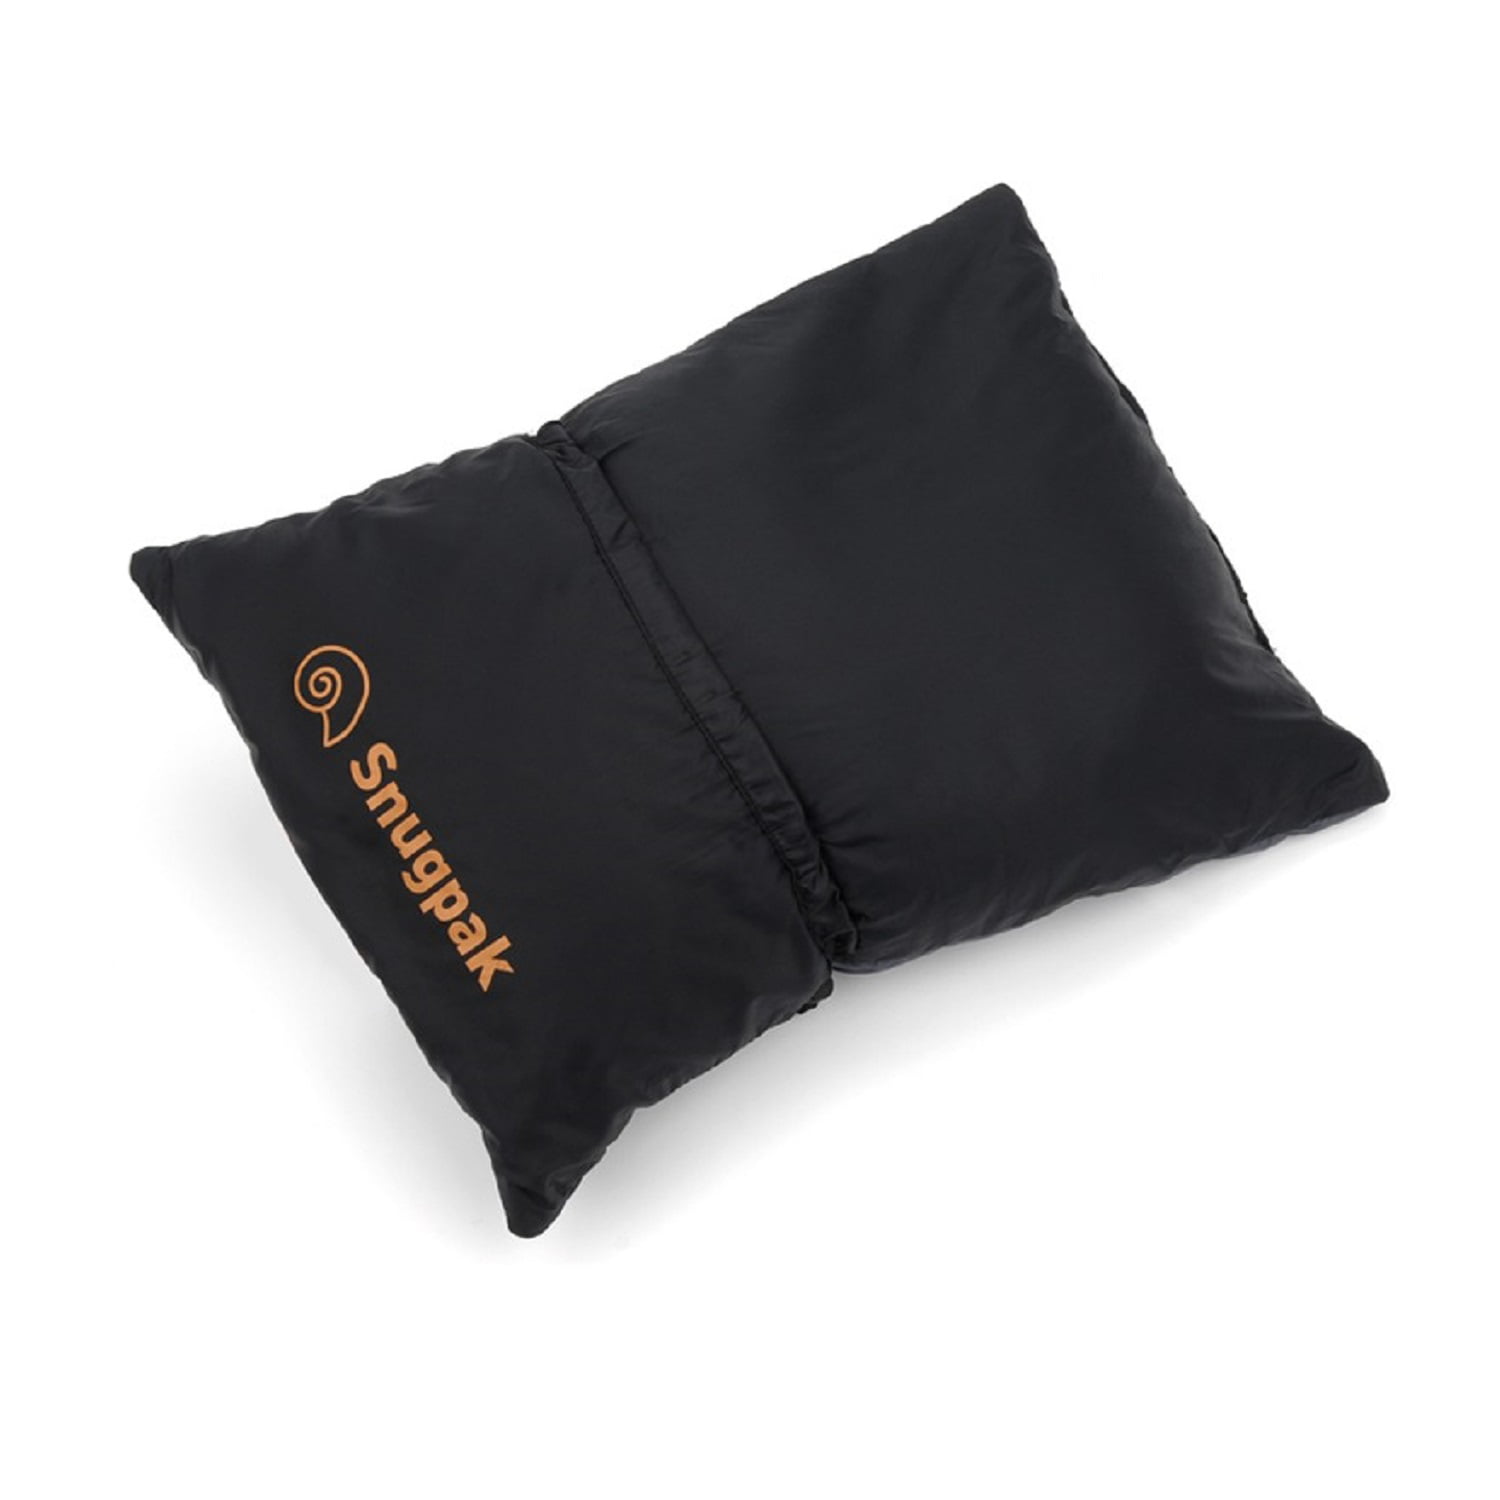 Lightweight & Compact Camping Pillow with Stuff Sack Snugpak Snuggy Pillow 